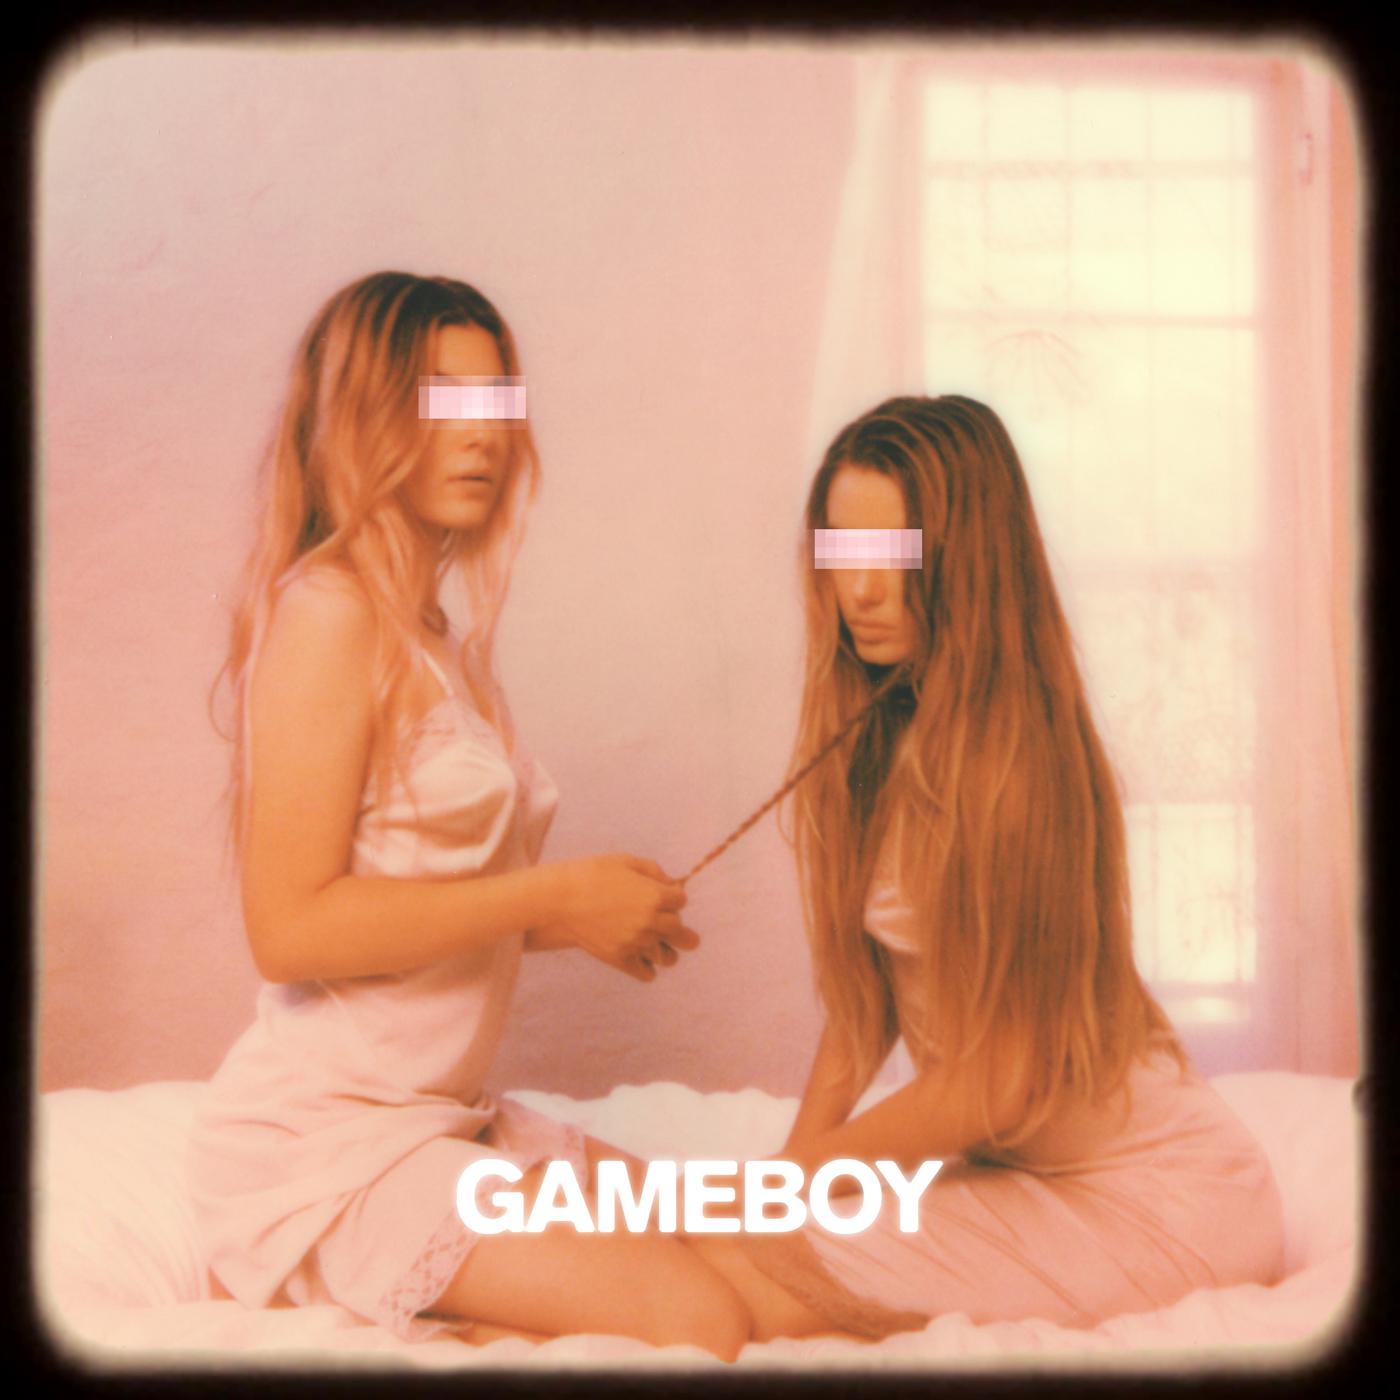 gameboy歌词 歌手Bahari-专辑gameboy-单曲《gameboy》LRC歌词下载